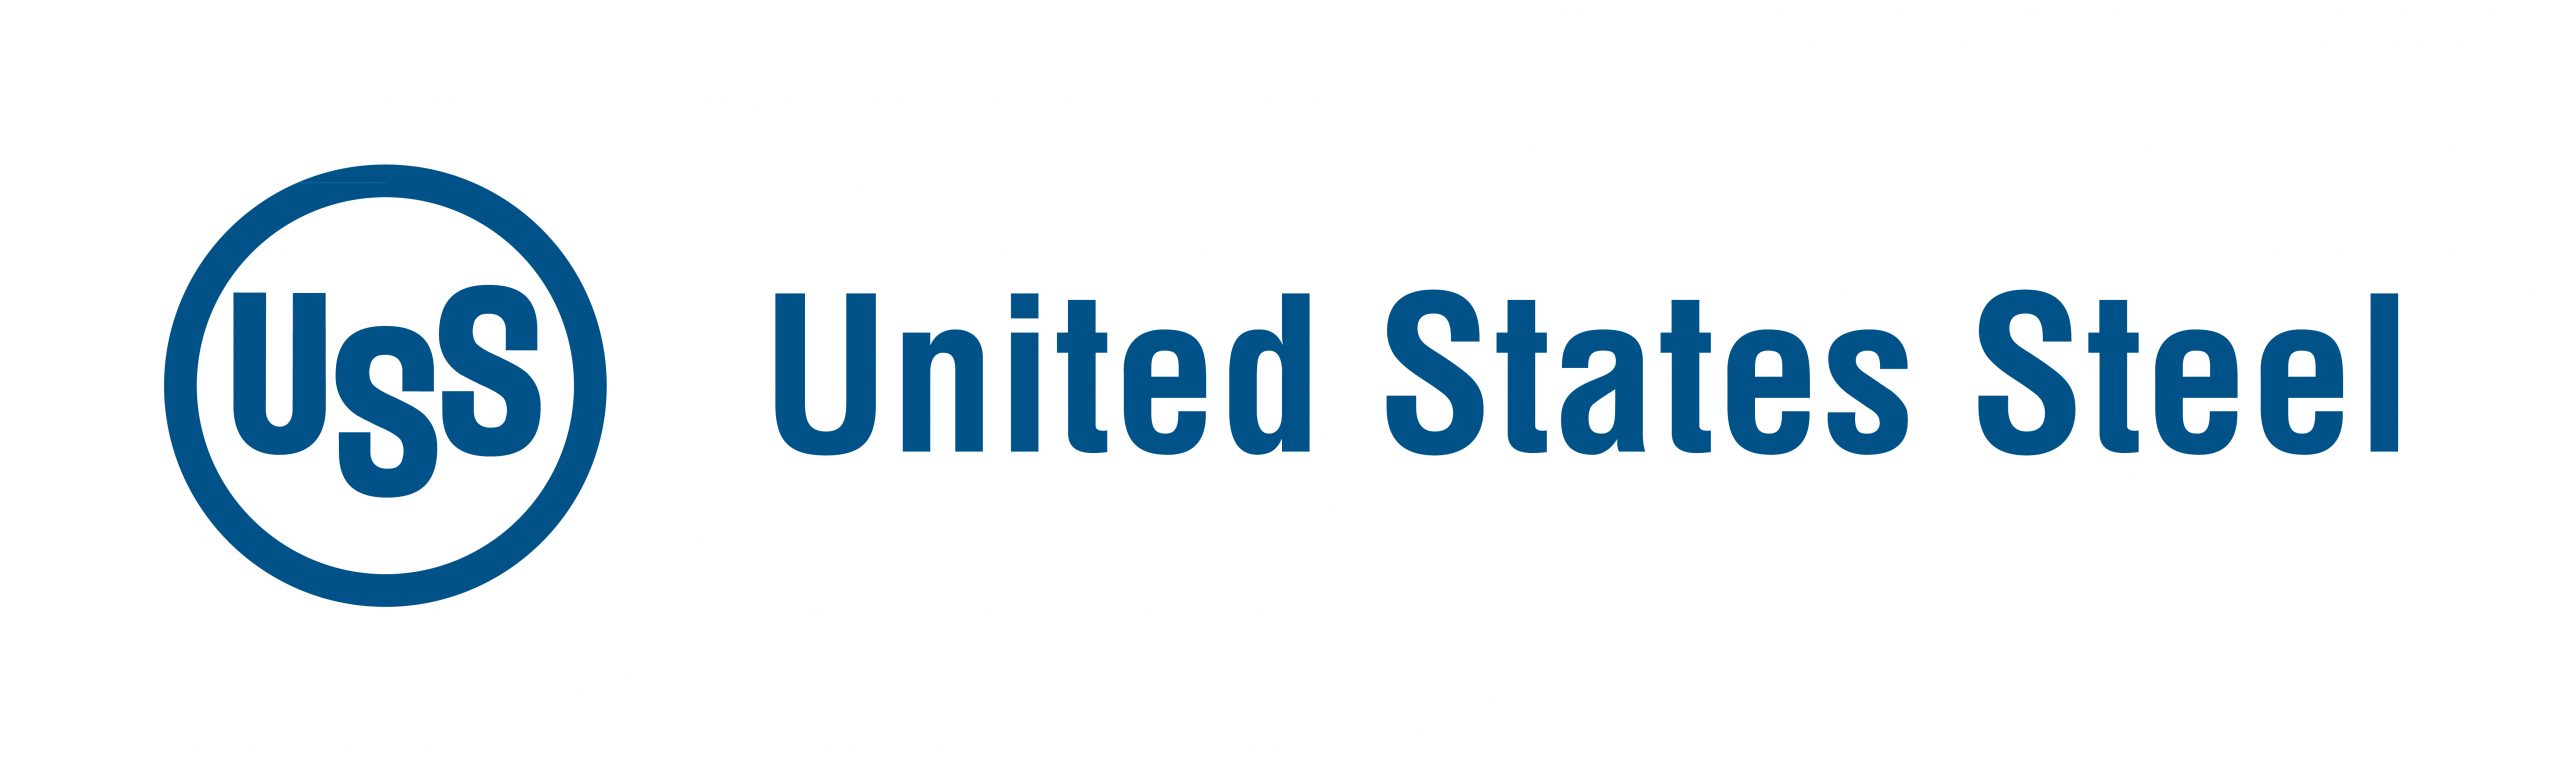 Link goes to ussteel.com, image is U. S. Steel logo